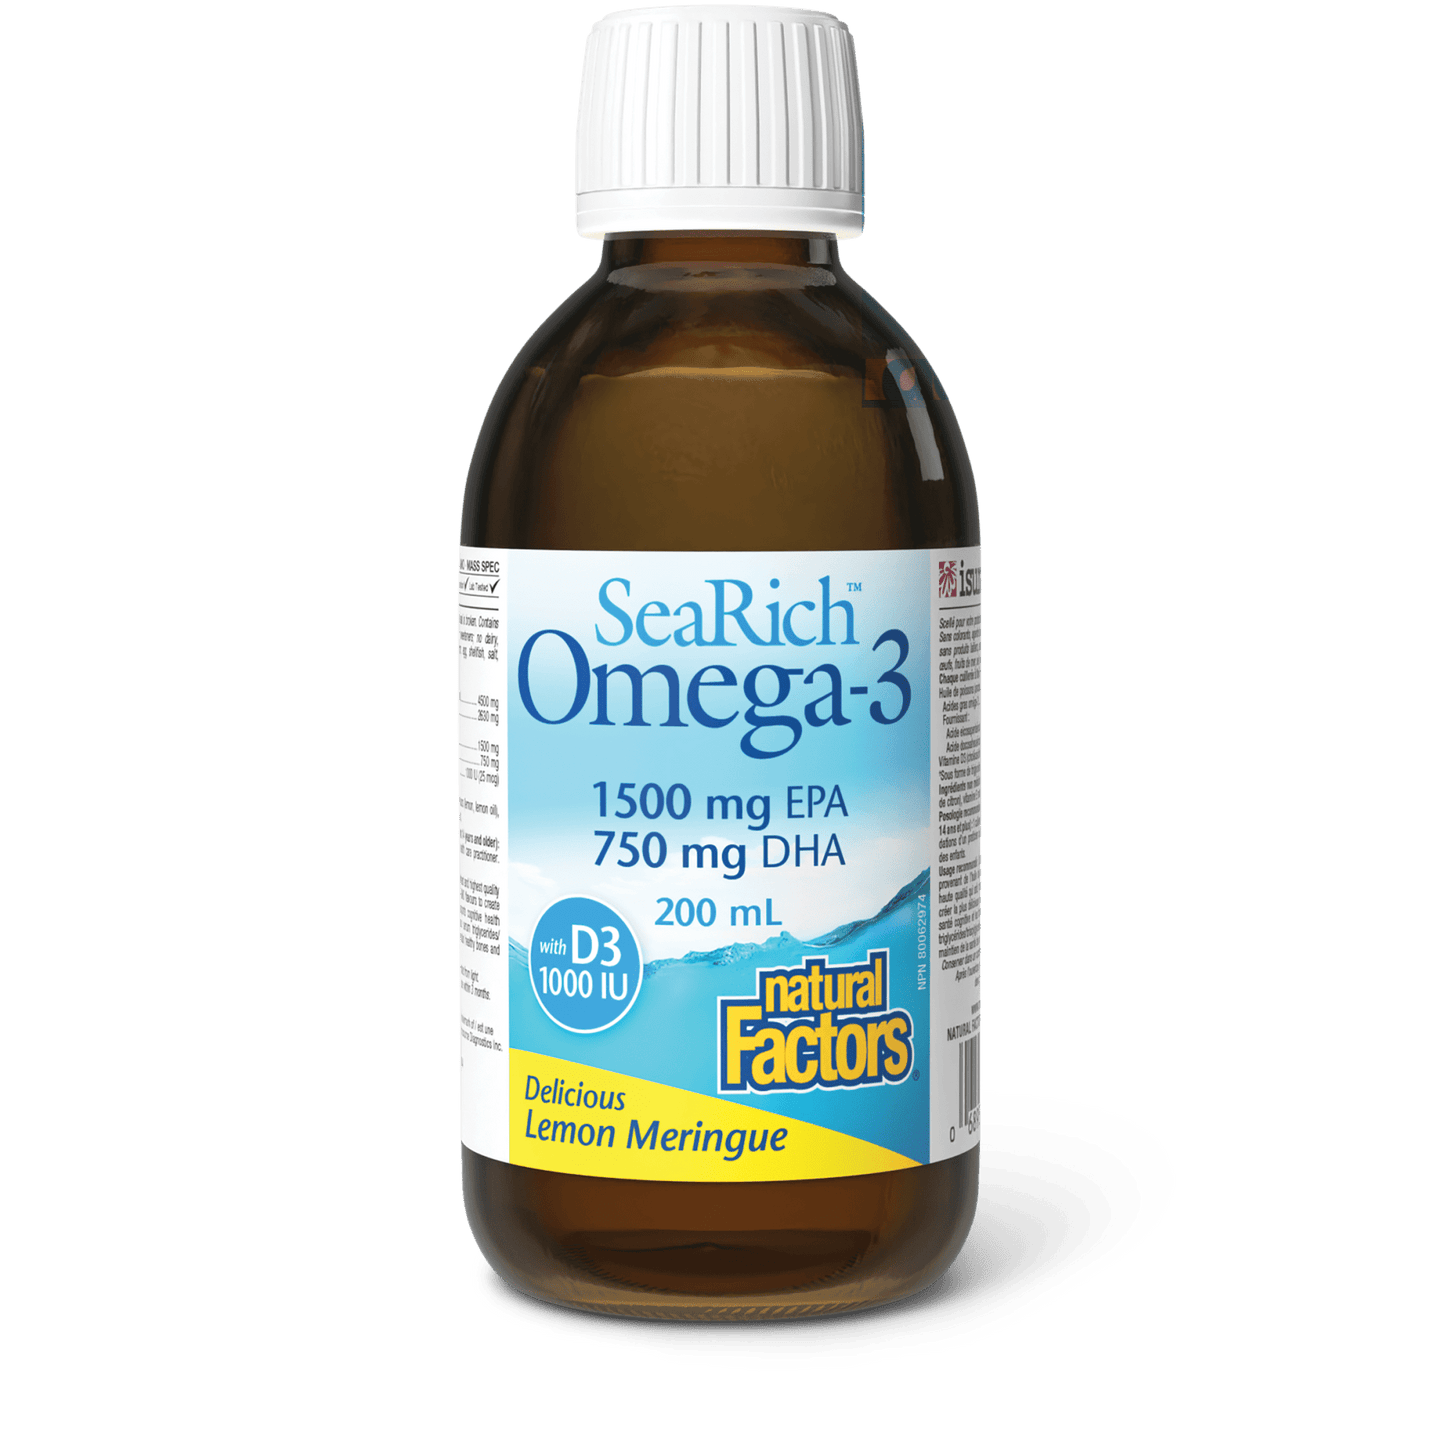 Omega-3 with D3 1500 mg EPA/750 mg DHA, Lemon Meringue, SeaRich, Natural Factors|v|image|35744